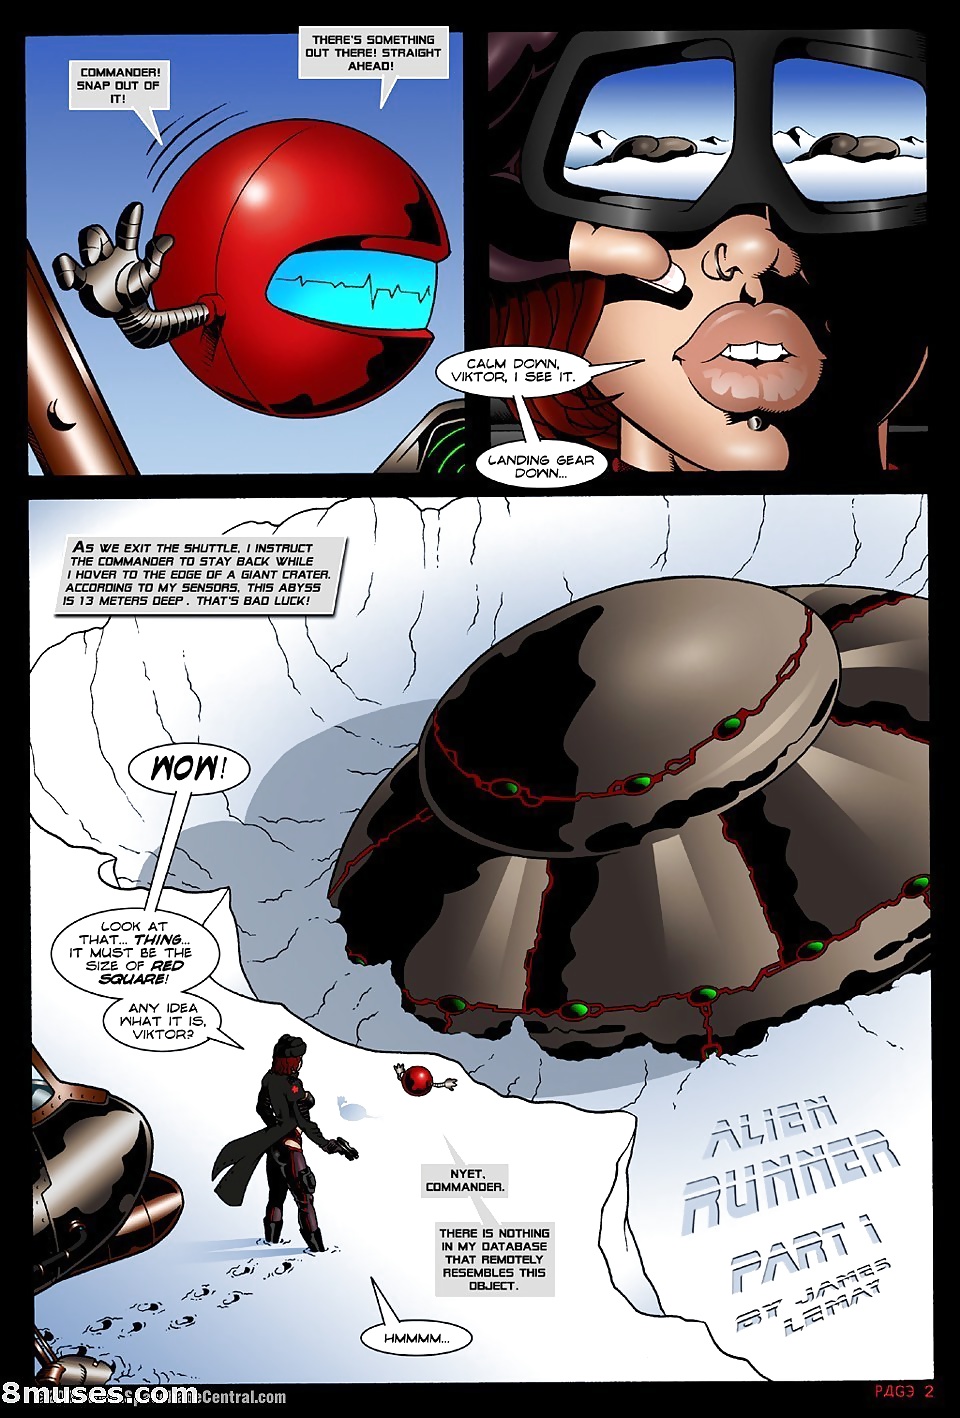 Alien runner - fumetto
 #31272476